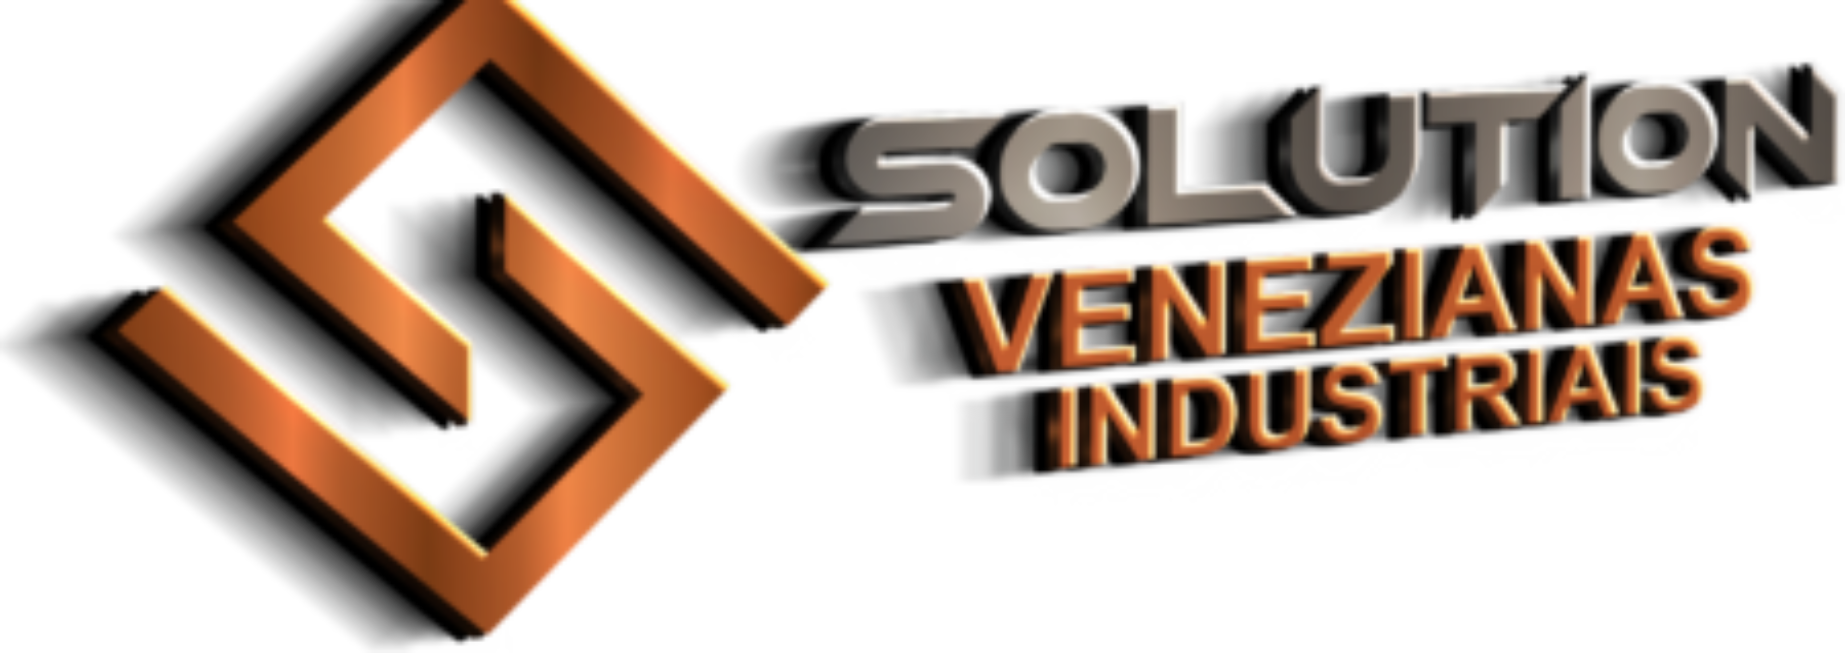 Solution Veneziana Industrial – (19) 3199-3469